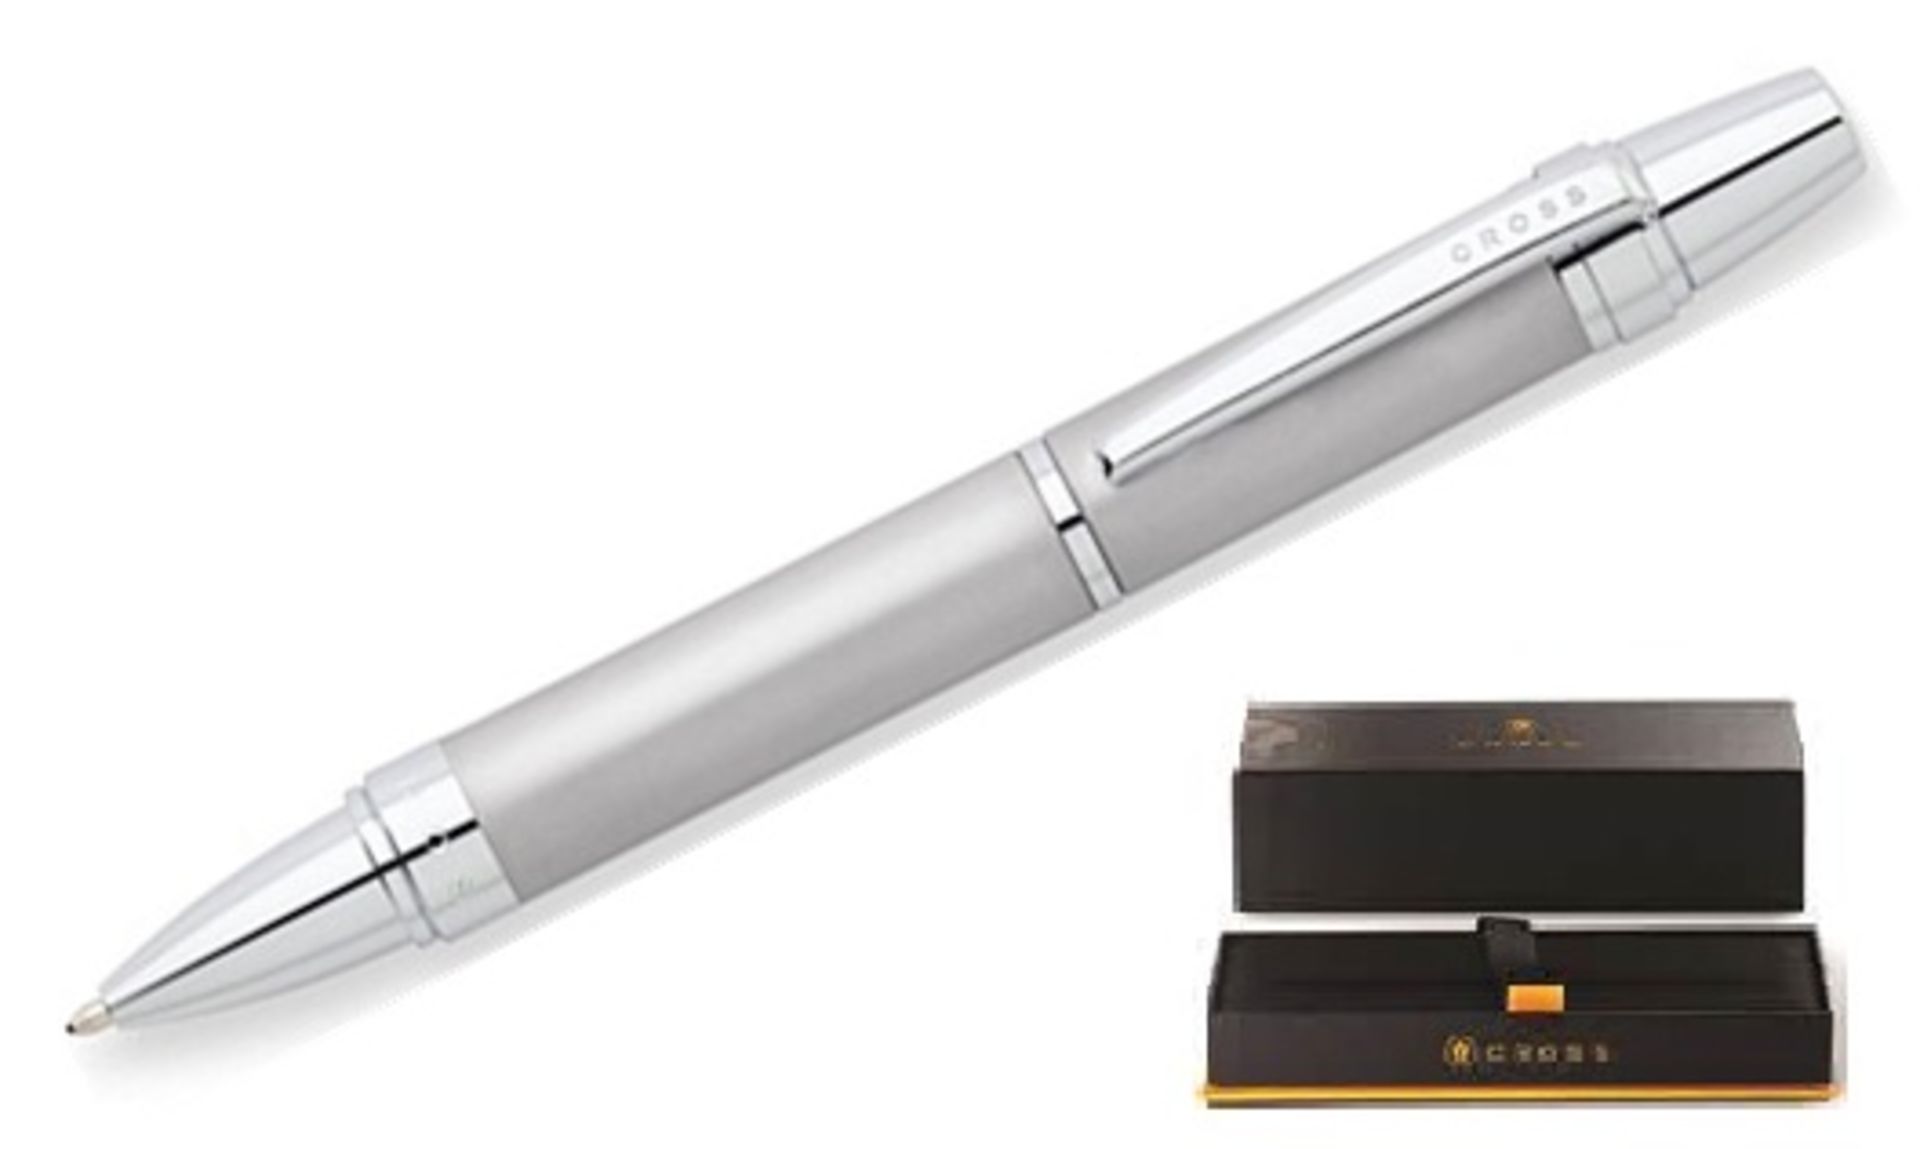 V Brand New Cross Nile Satin Chrome Ballpoint Pen - RRP £25.00 - Amazon Price £17.68 X 2 YOUR BID